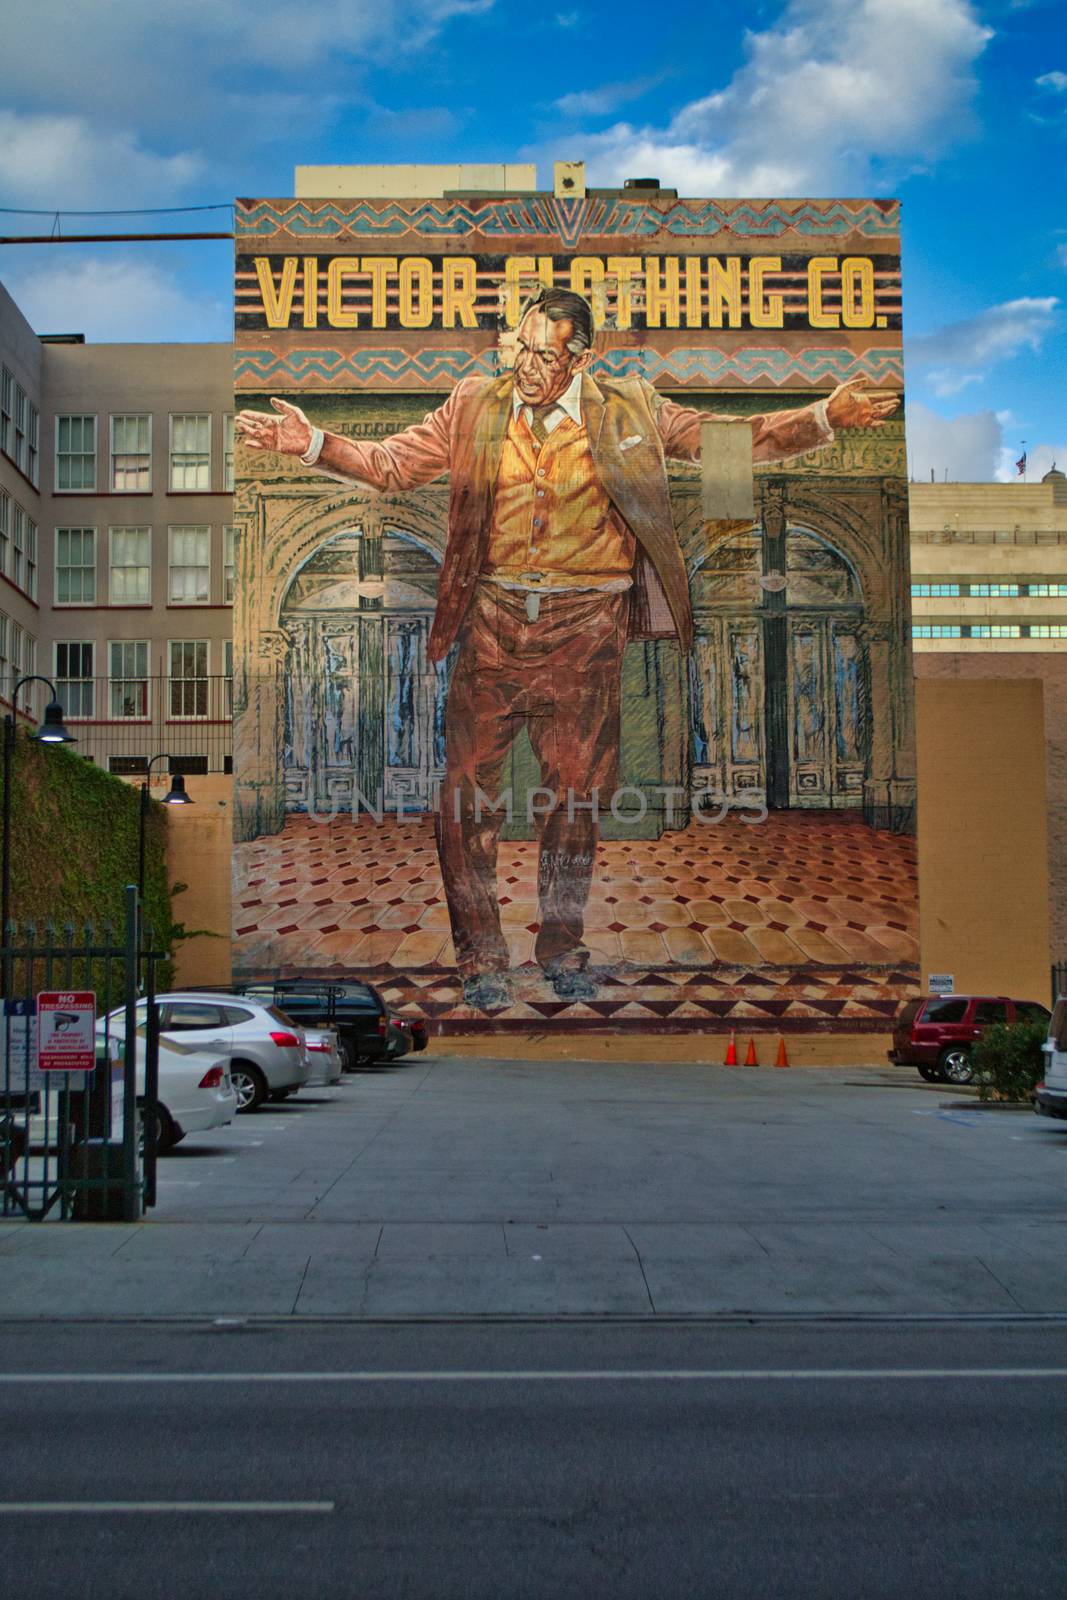 Los Angeles, USA, November 2013: Victor Clothing Co Mural at Broadway Ave, Los Angeles, California, USA